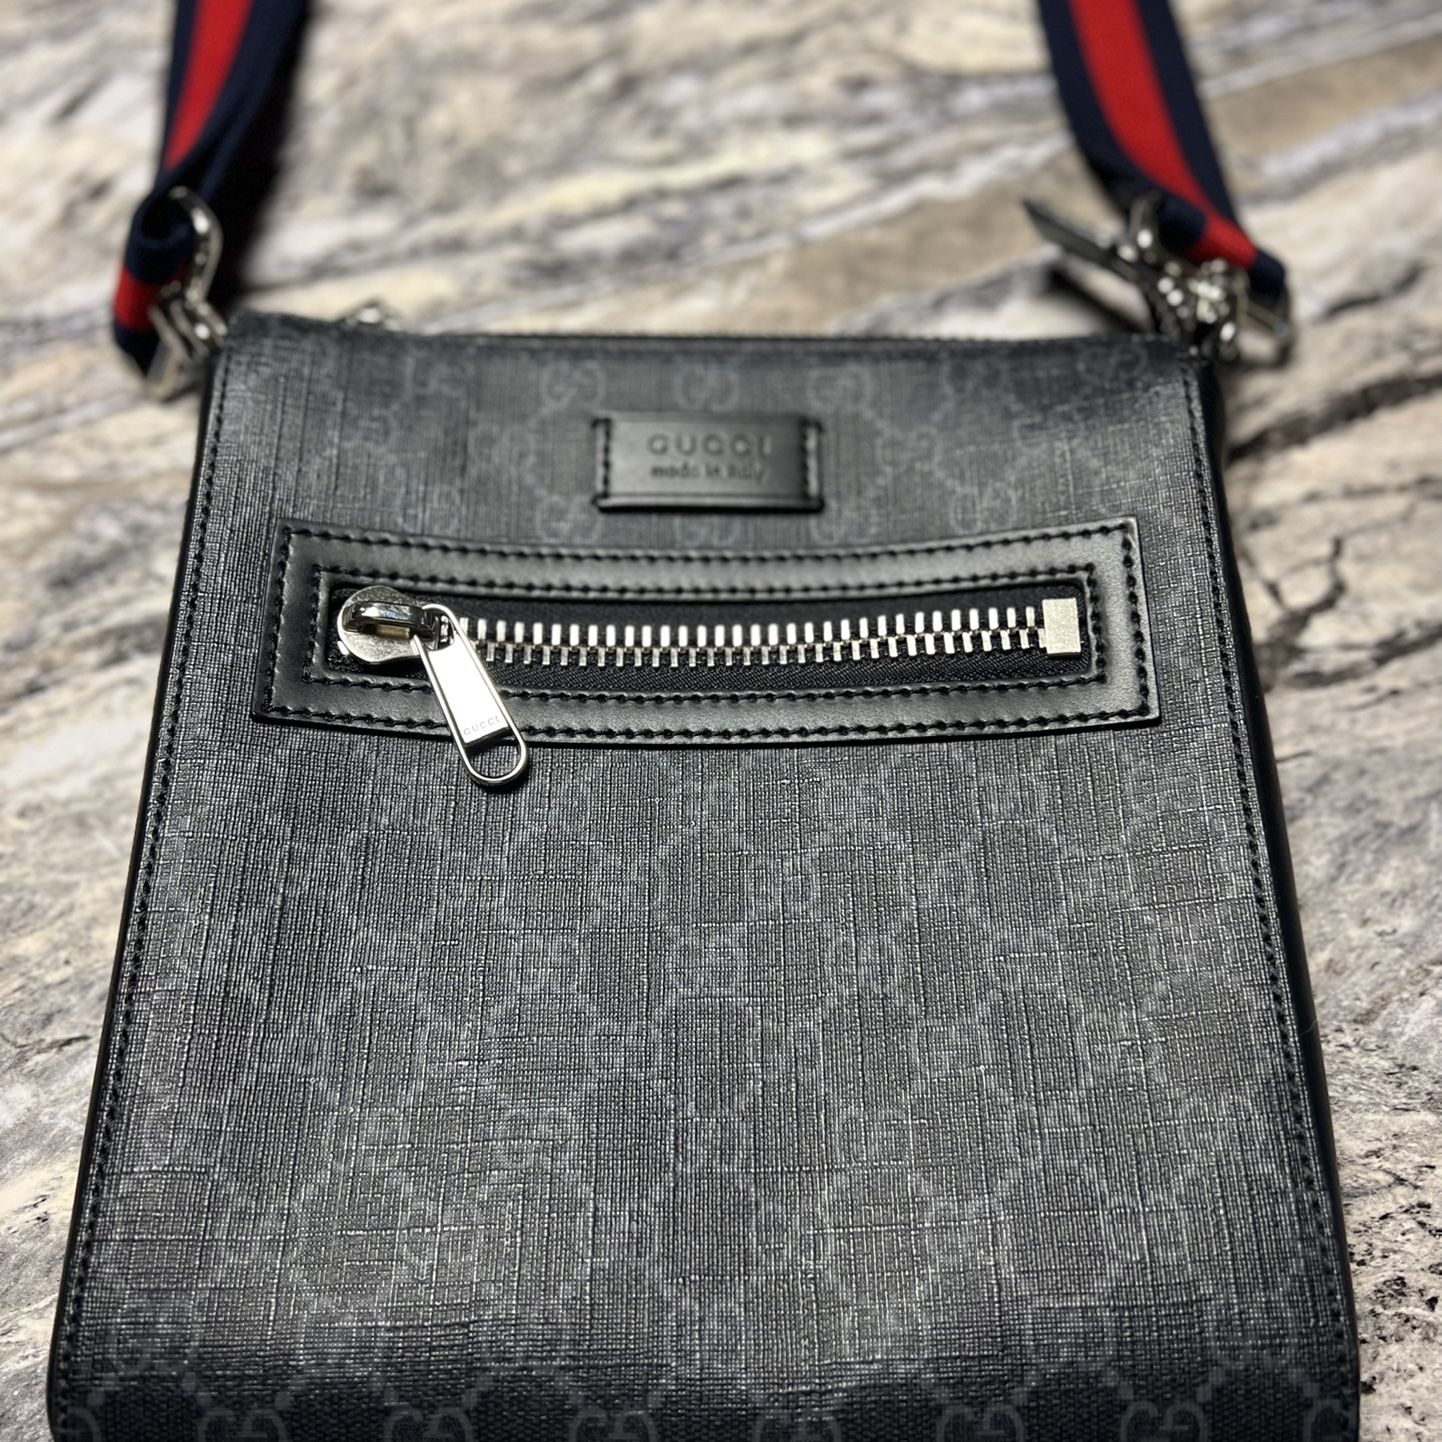 Gucci GG Supreme Black Small Messenger Bag - Check 